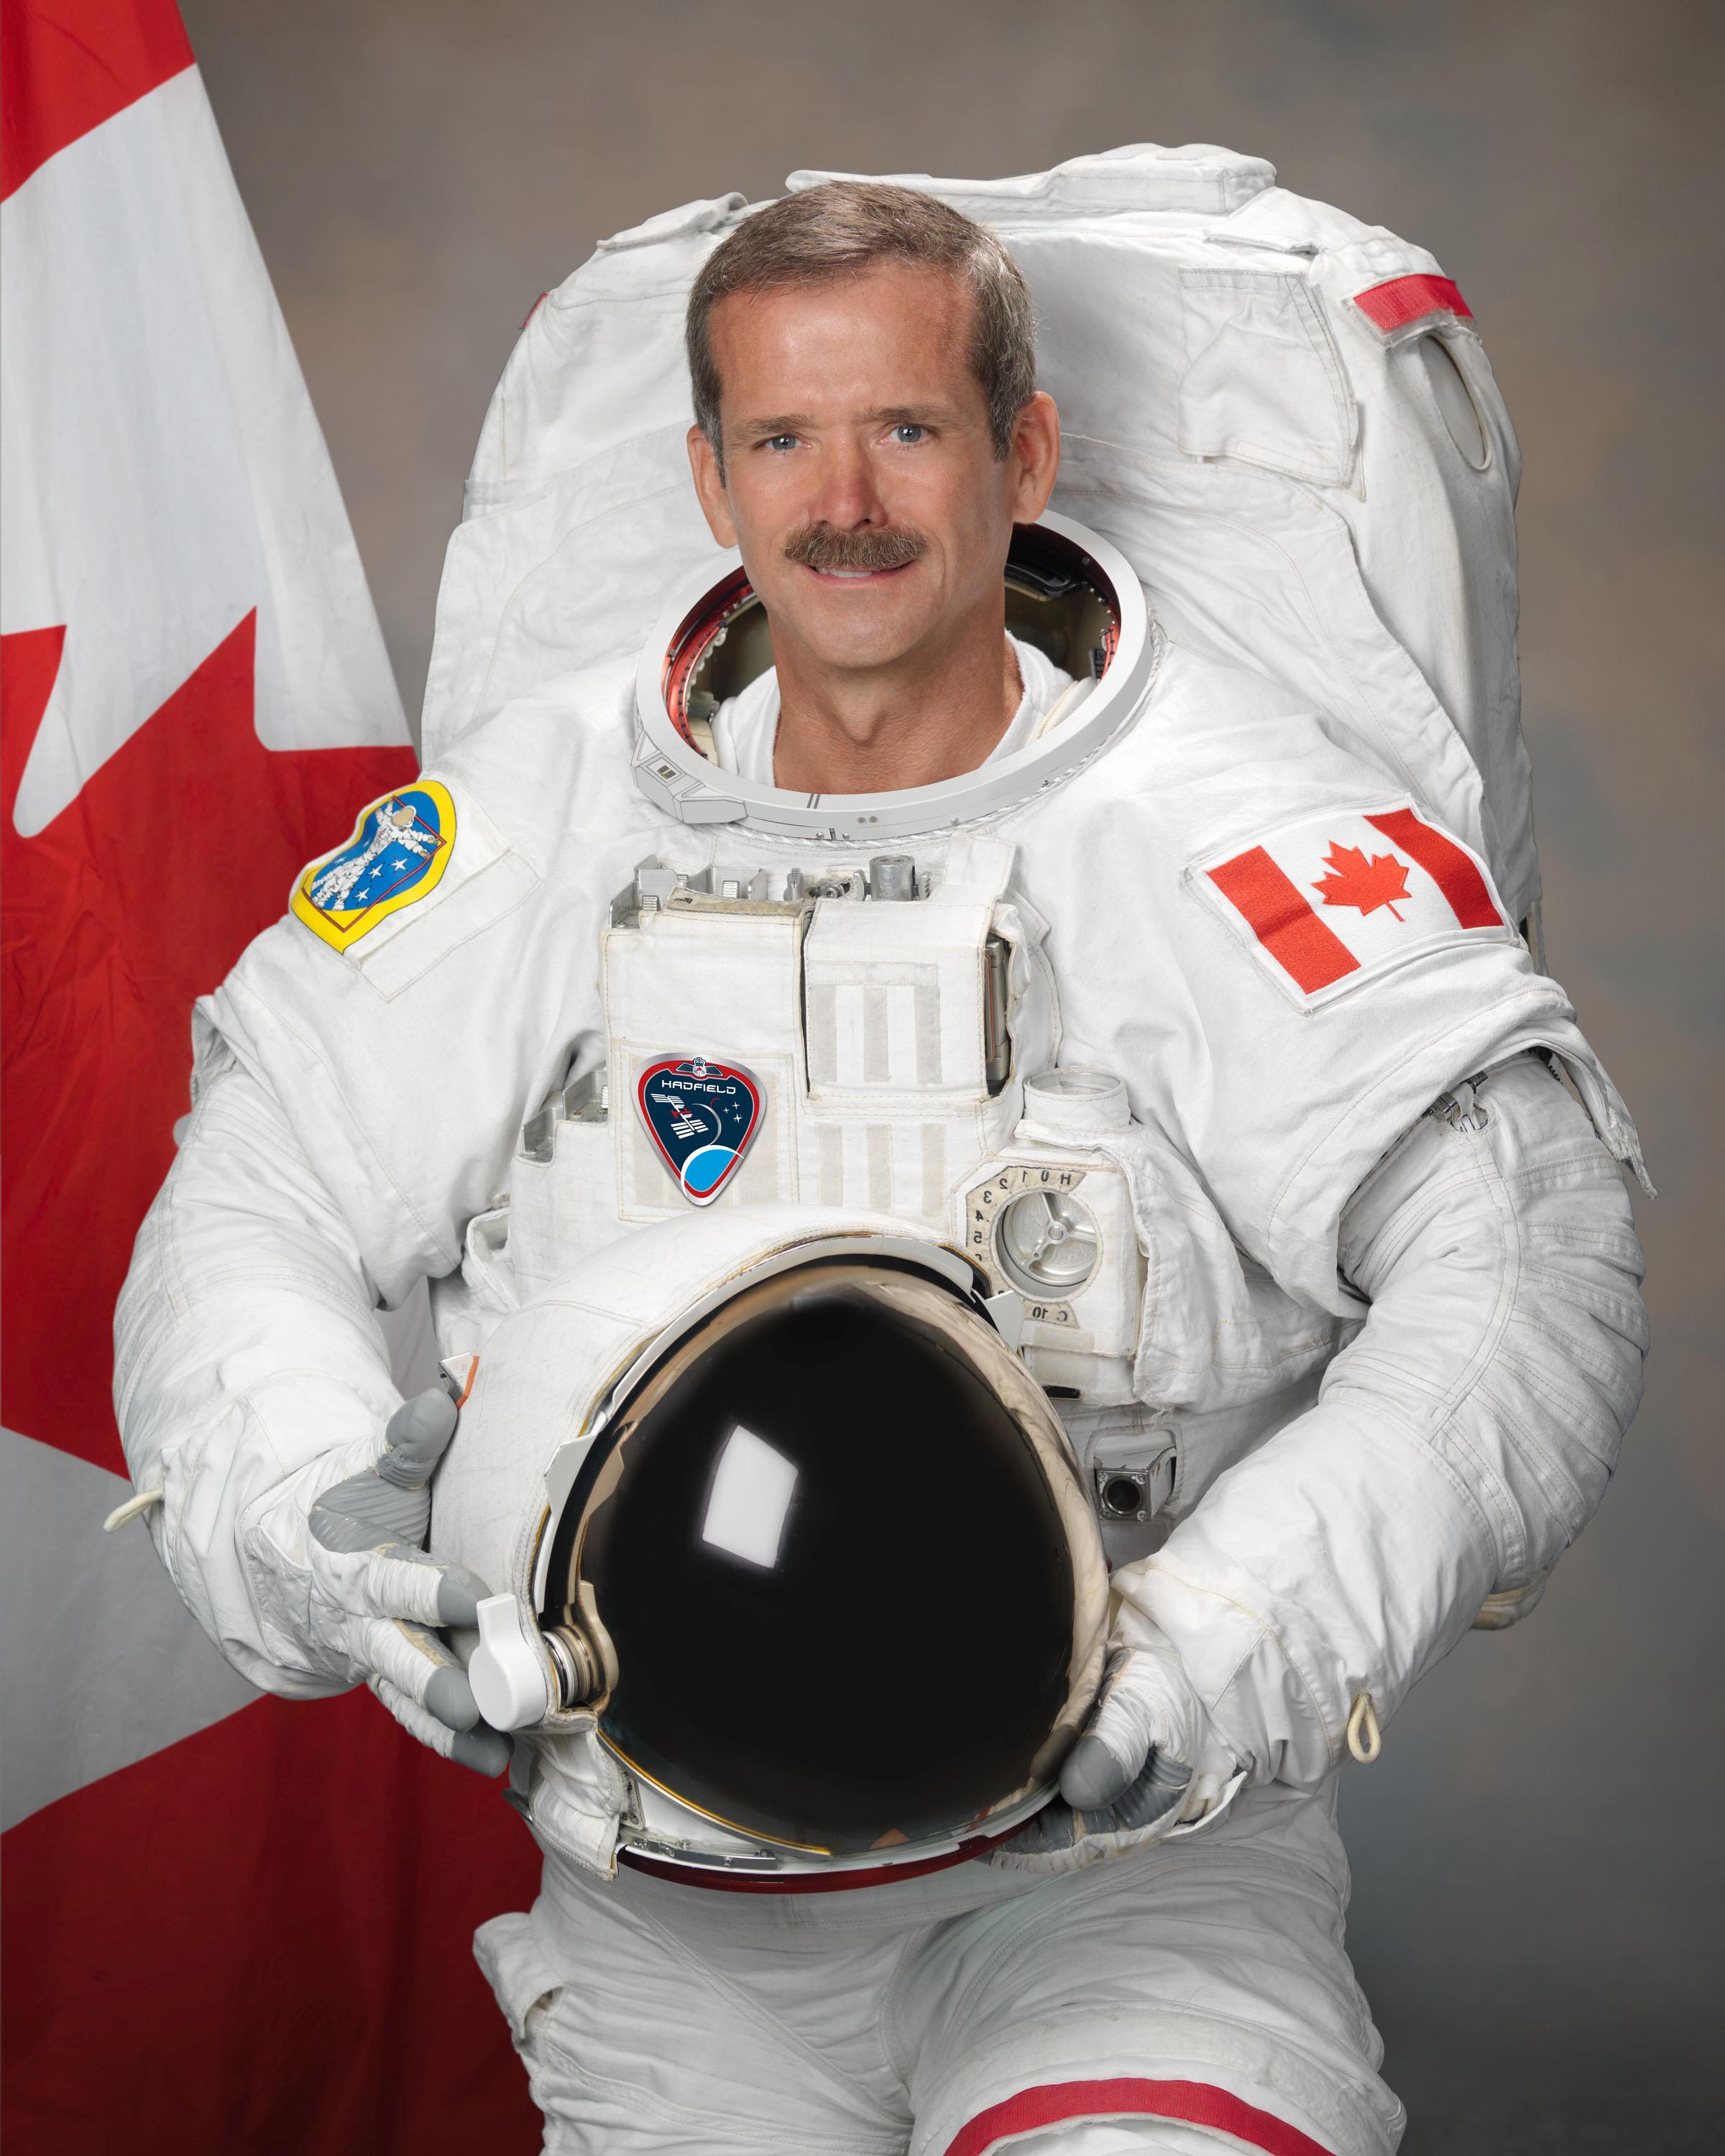 Photograph official portrait of Canadian Astronaut Chris Hadfield in EMU suit. Photo Date: July 19, 2011. Location: Building 8, Room 183 - Photo Studio. Photographer: Robert Markowitz